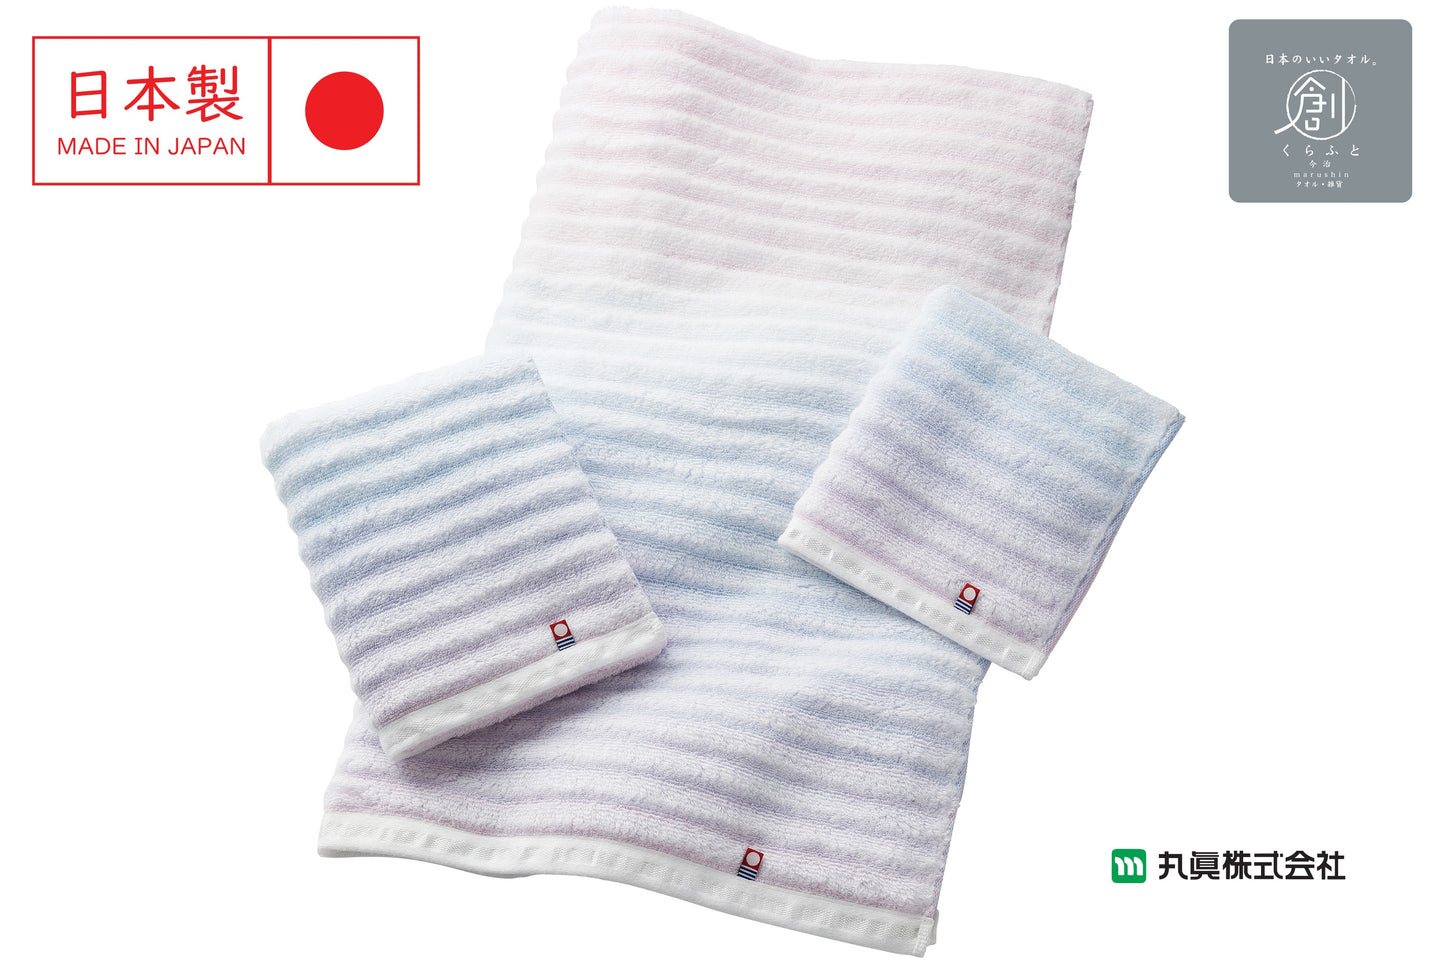 Imabari "Craft" Star plus Flow Zero Twist Towel